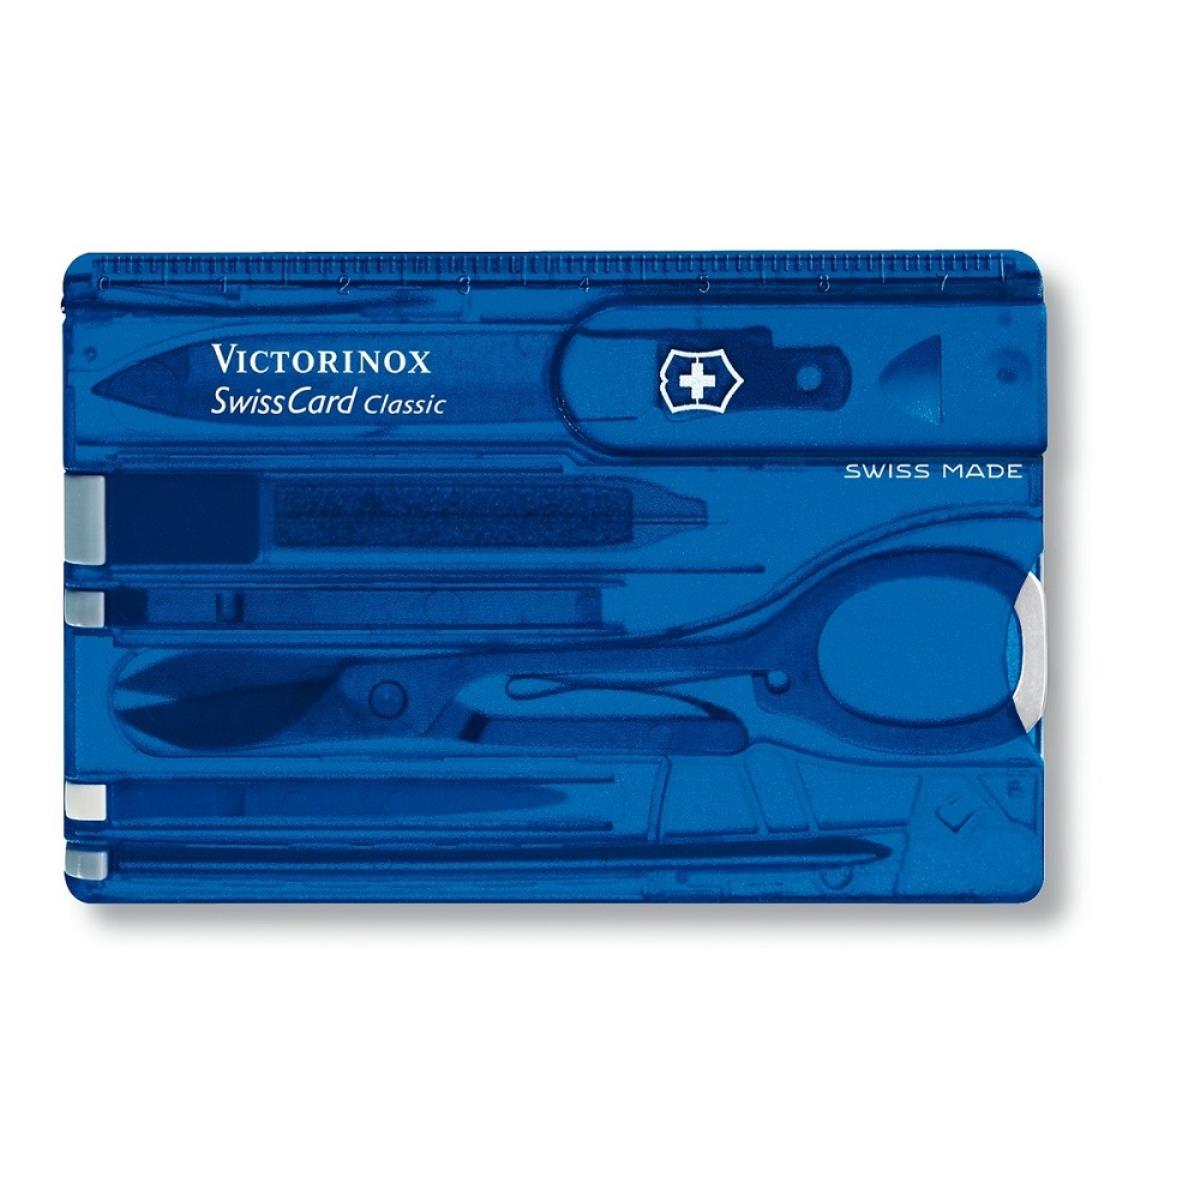 Нож 0.7122.T2 швейцарская карточка VICTORINOX нож для хлеба swiss modern victorinox 26 см